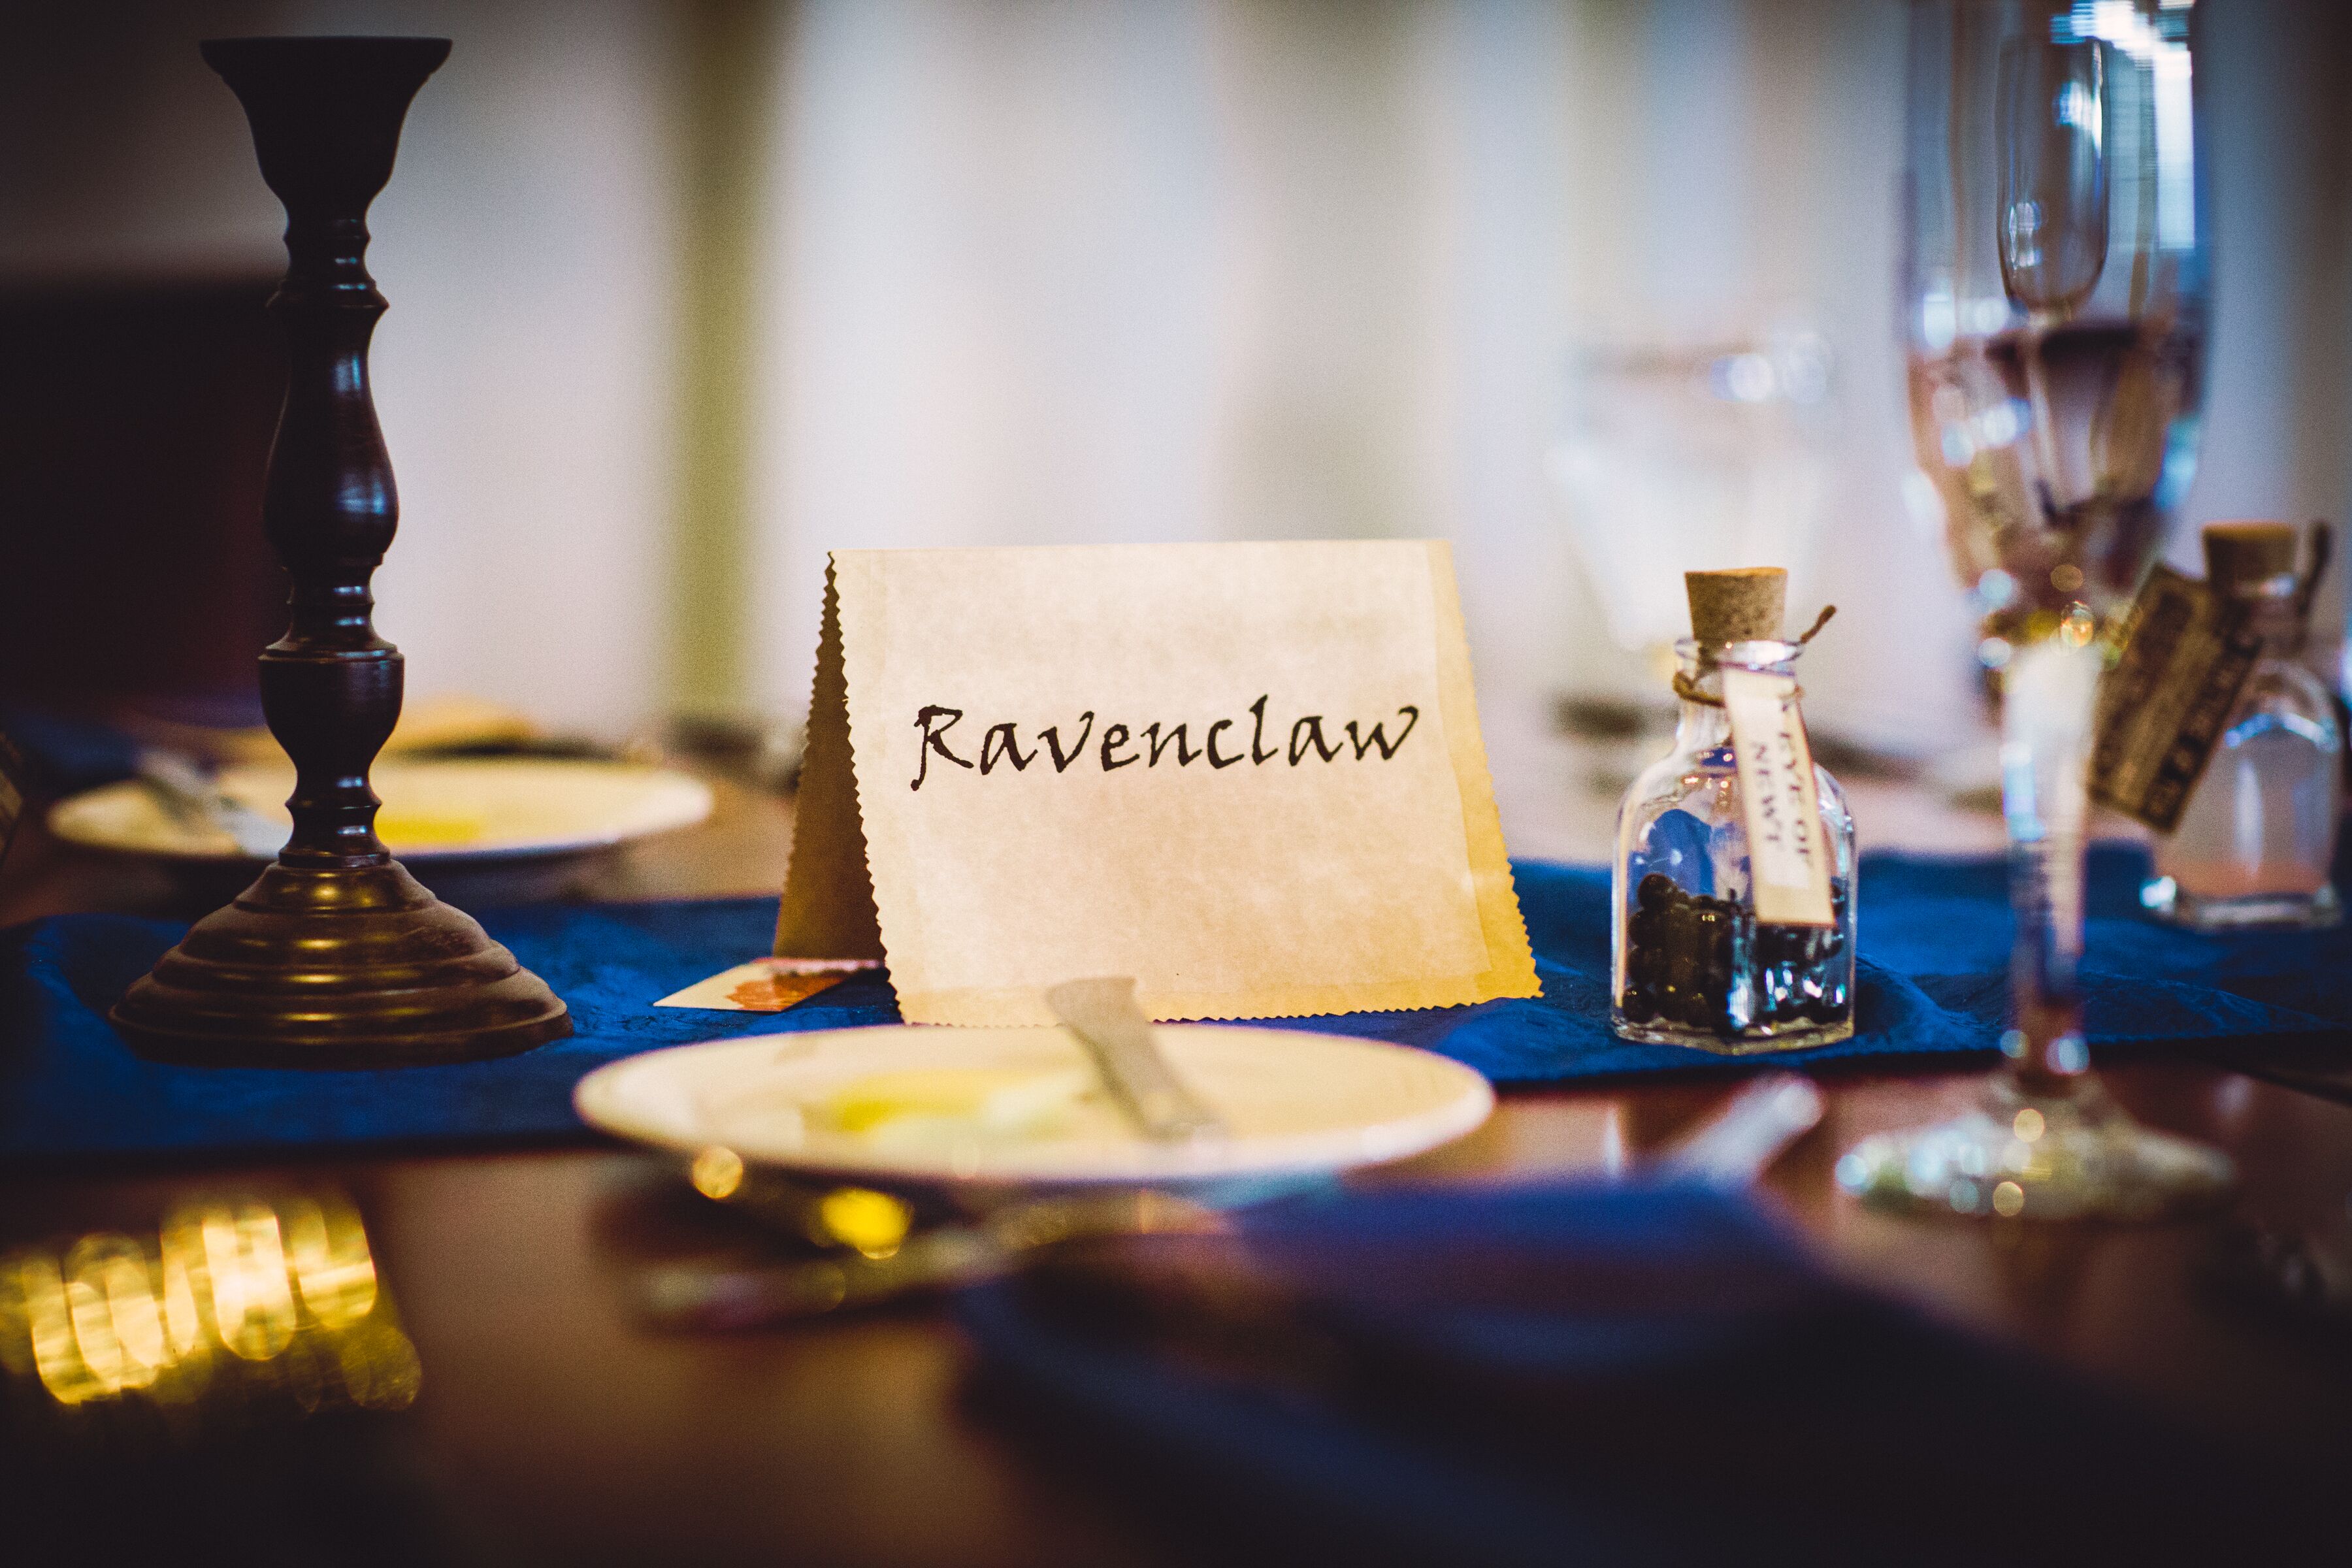 hogwarts inspired dining room table